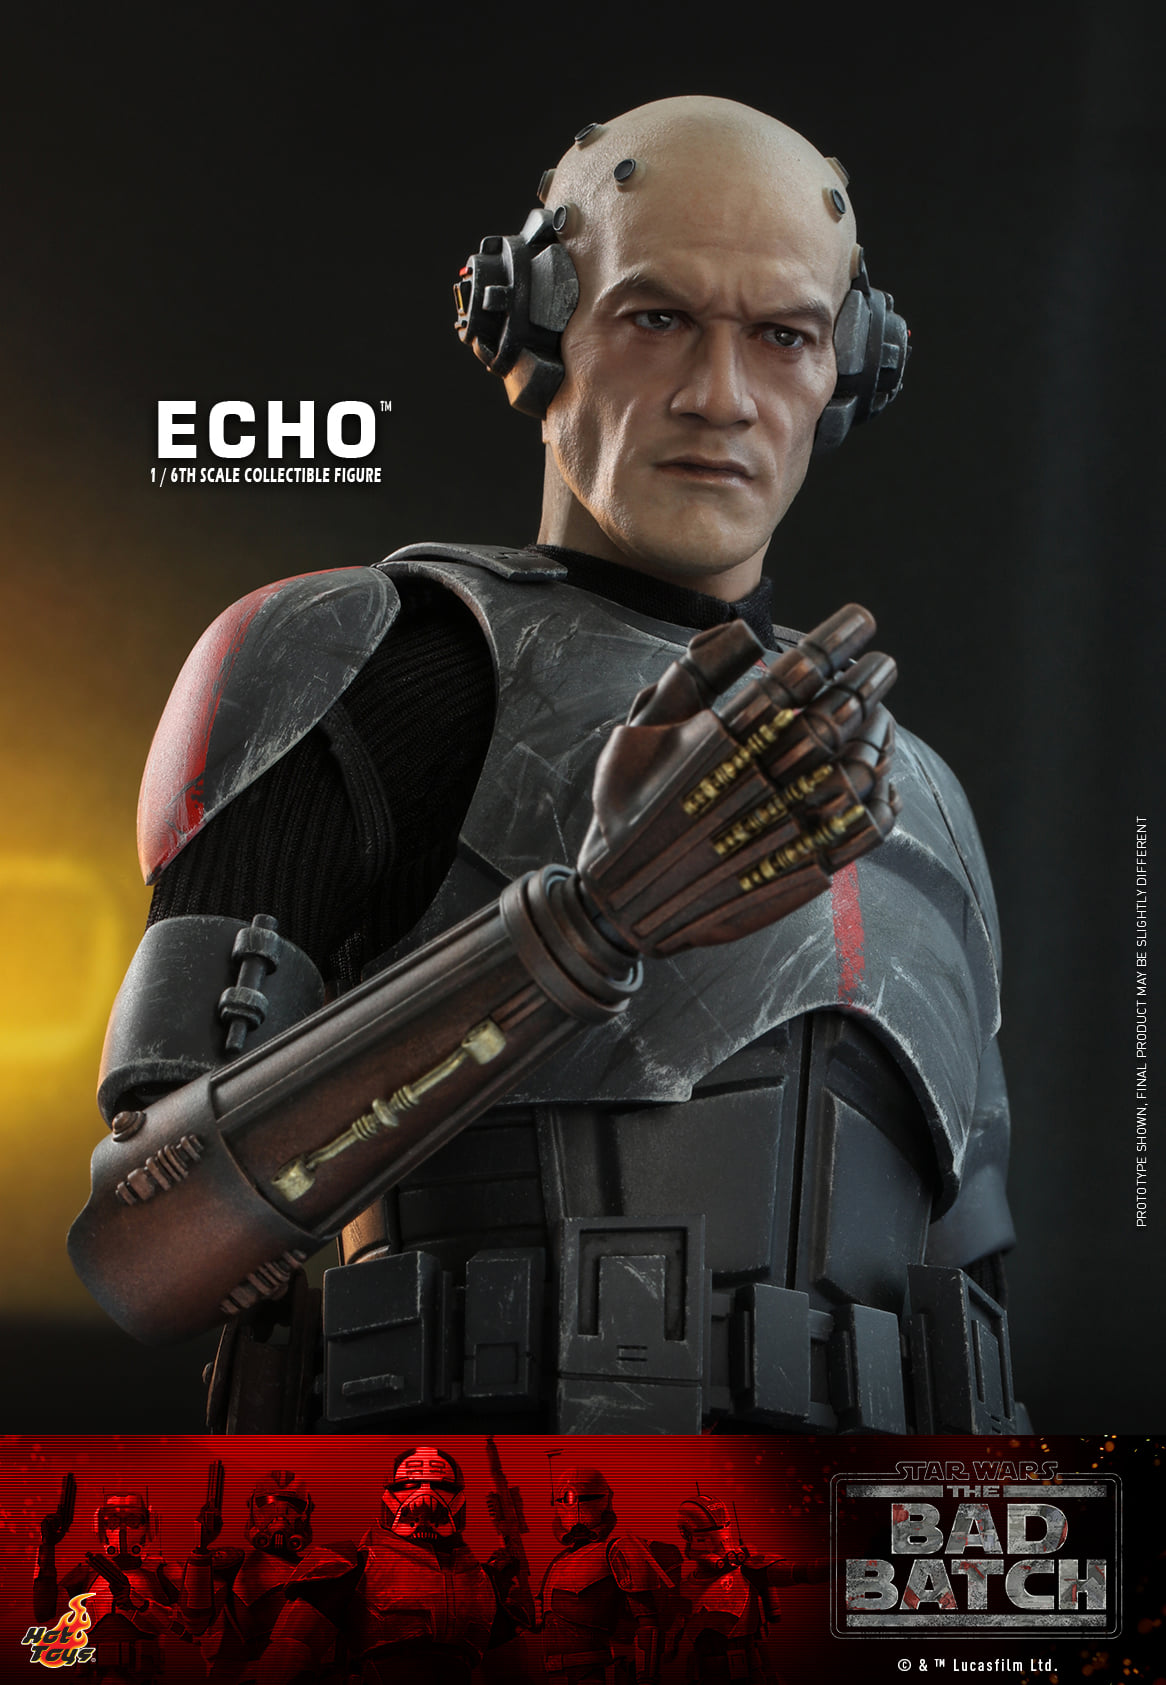 Echo 7